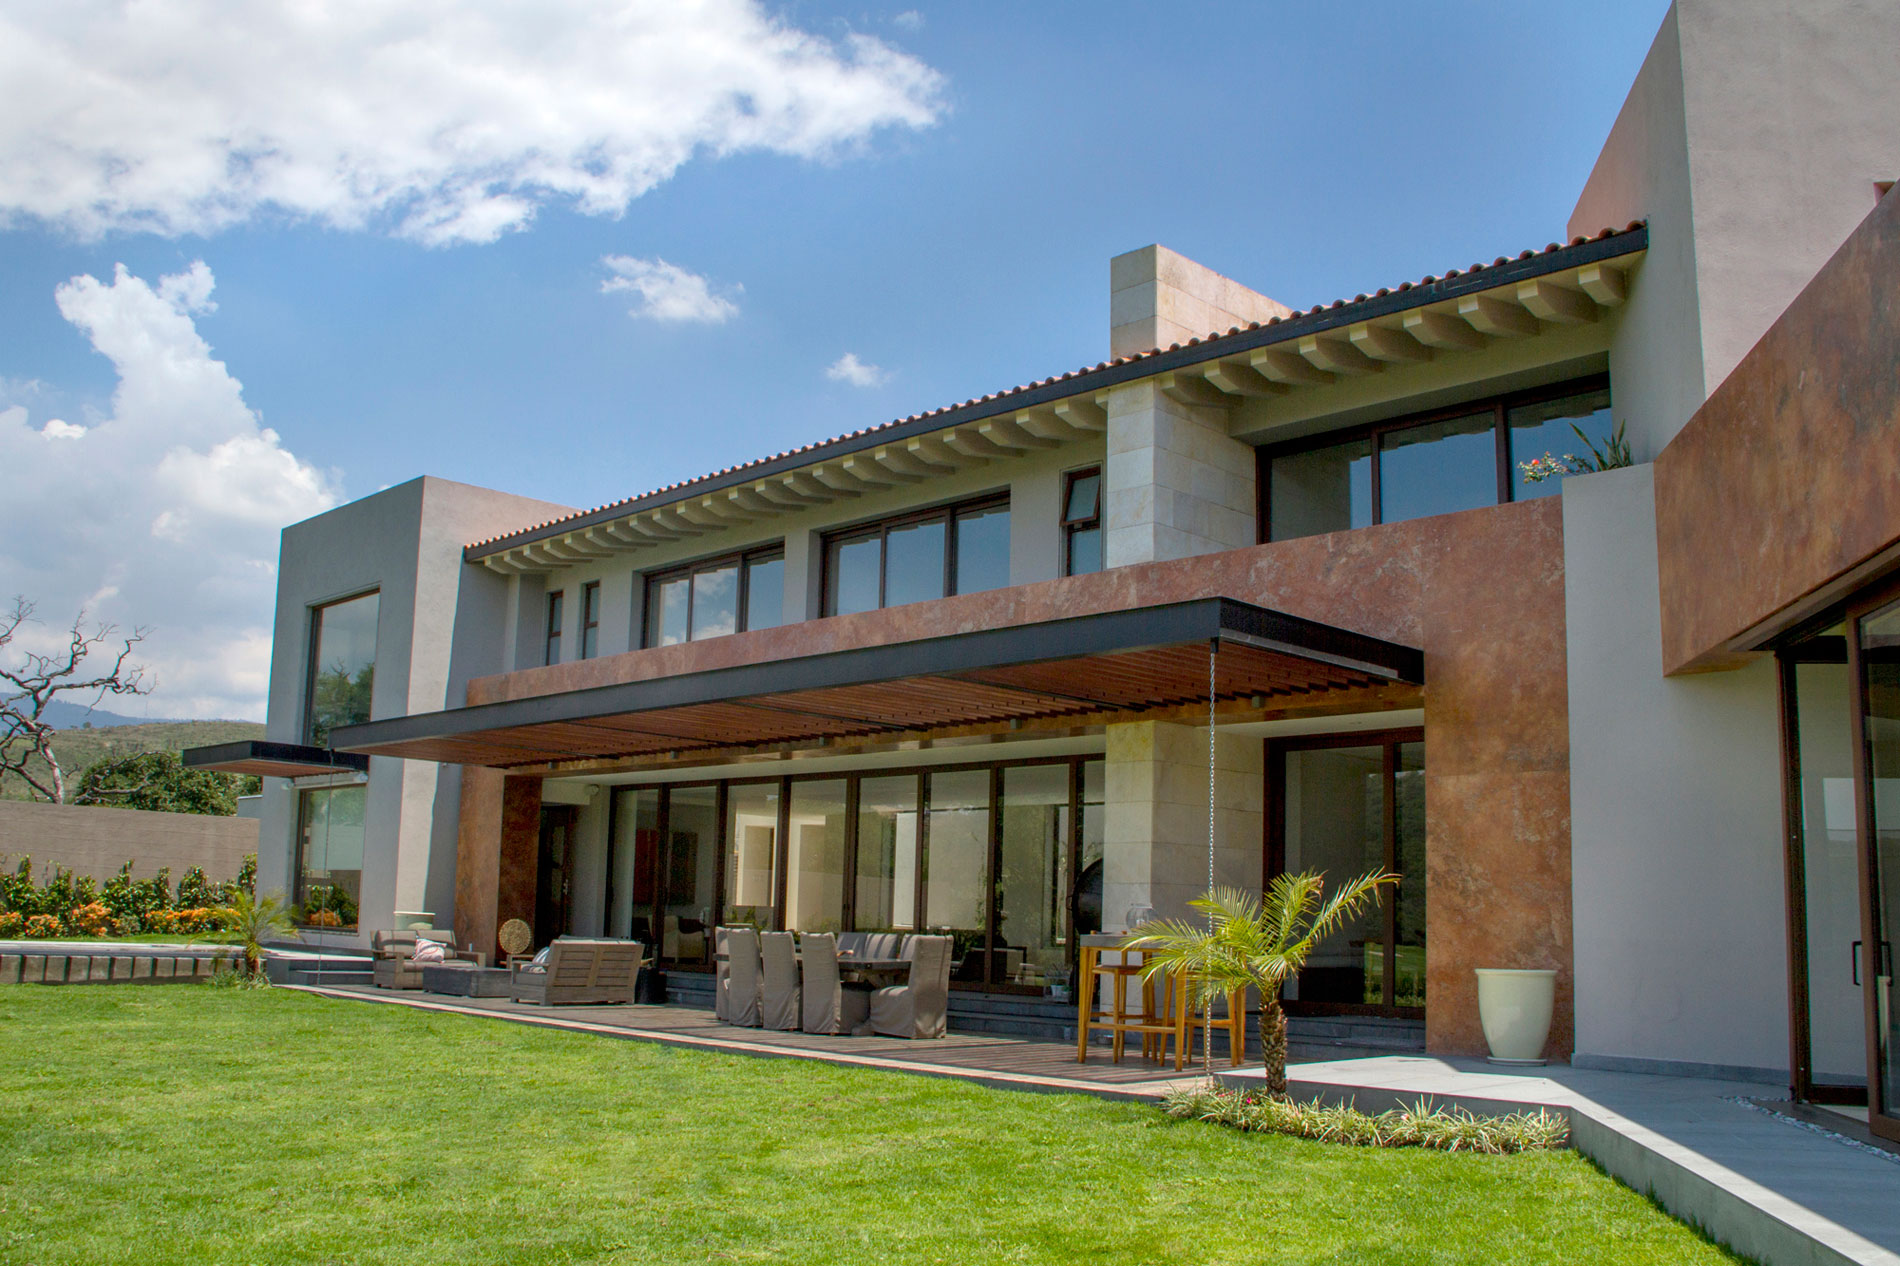 Casa Bosque Real 4 Puntos By Maz Arquitectos Caandesign Architecture And Home Design Blog